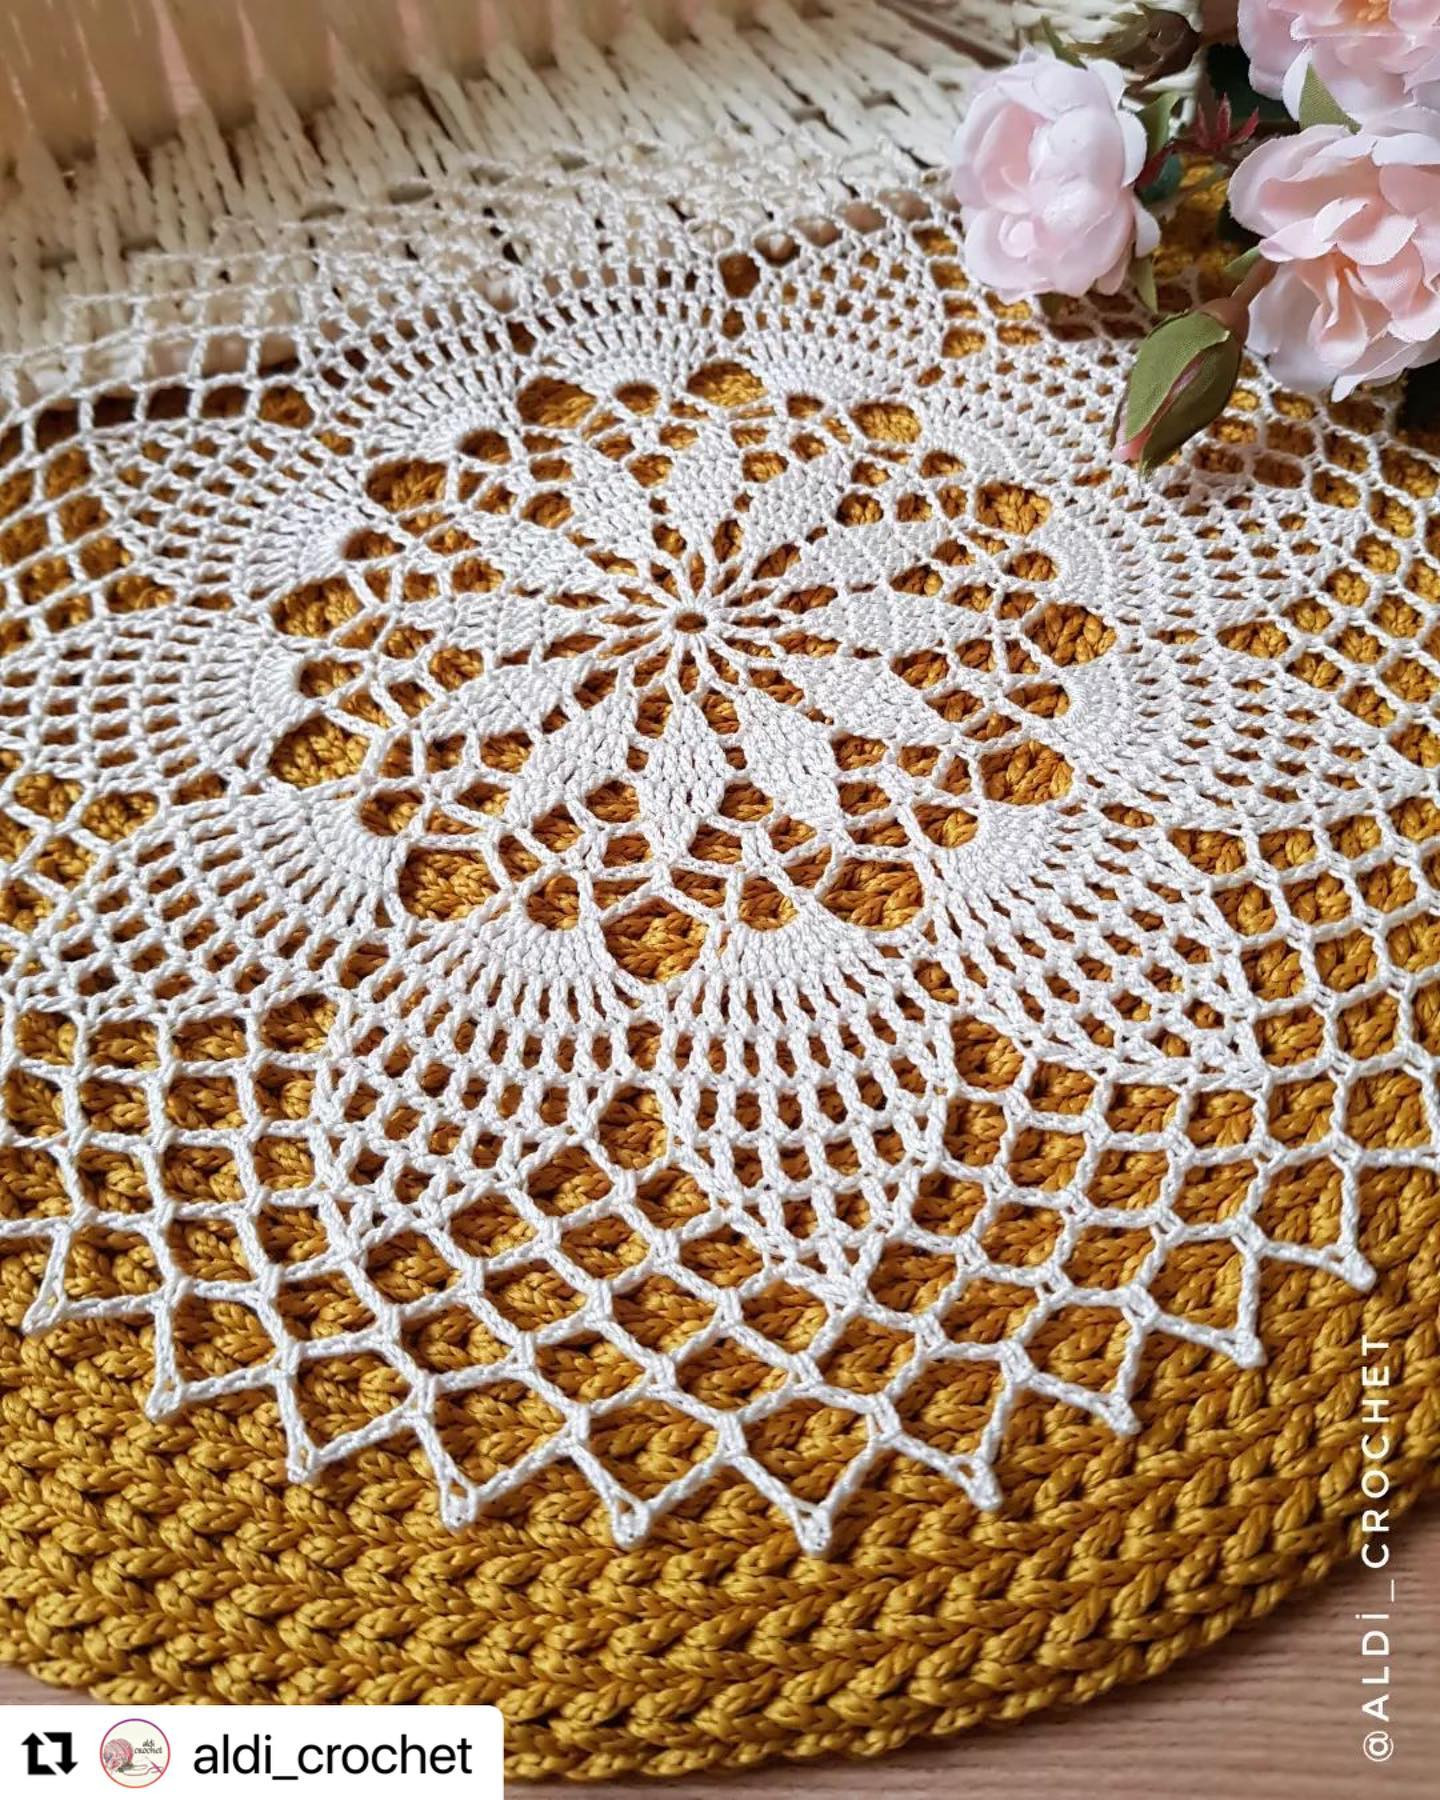 Geometric Crochet pattern circle with twelve petals